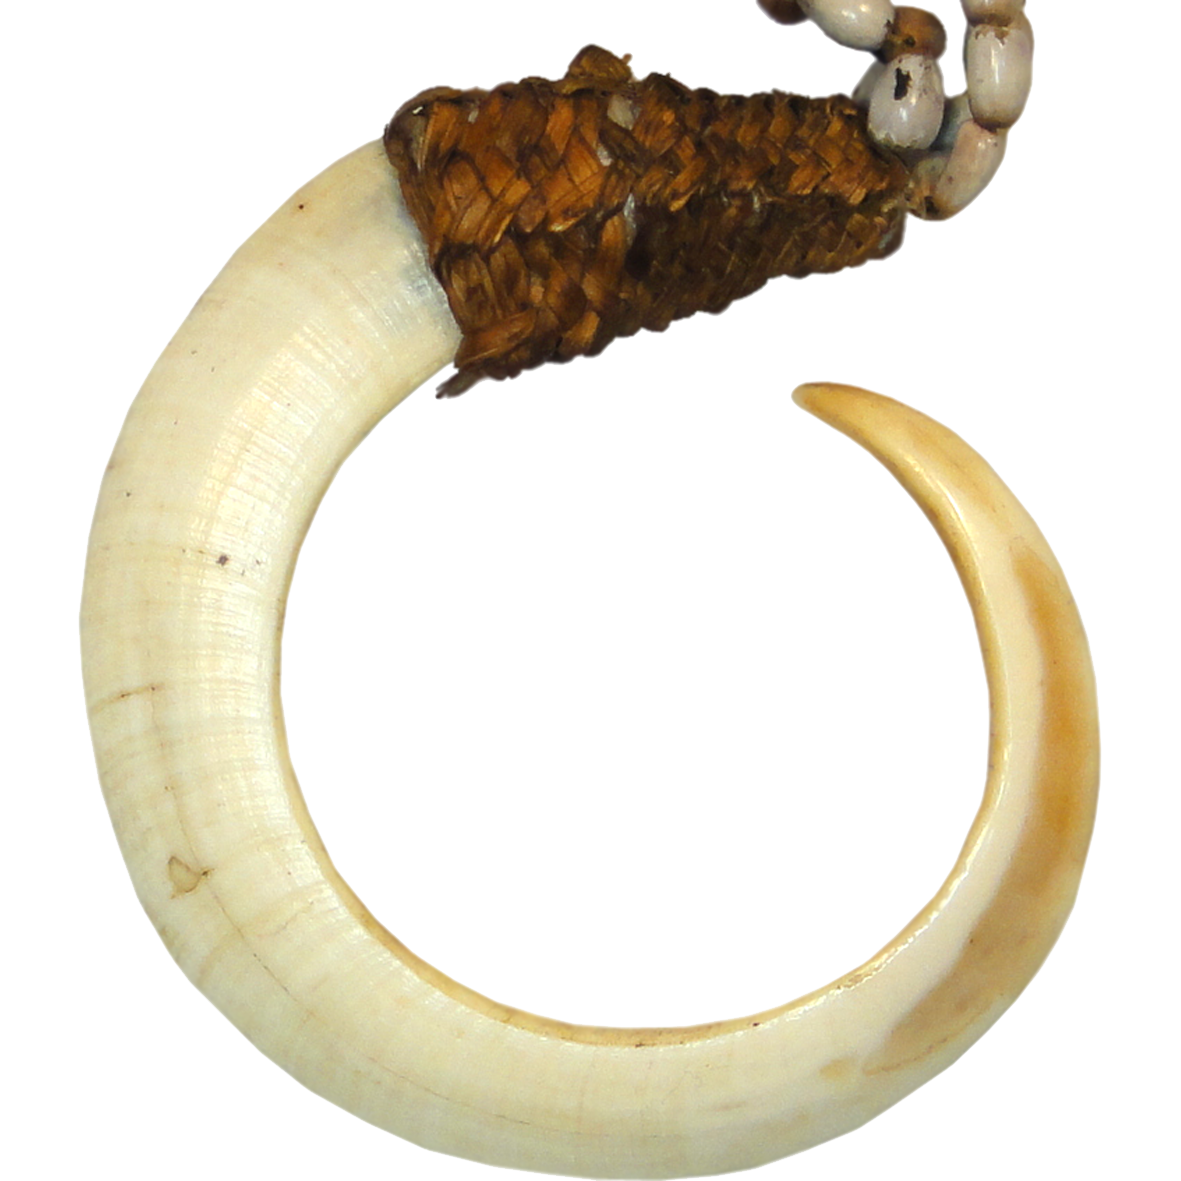 Papua New Guinea, Bena-Bena Tribe, Boar Tusk on a String of Coix Seeds (reverse)